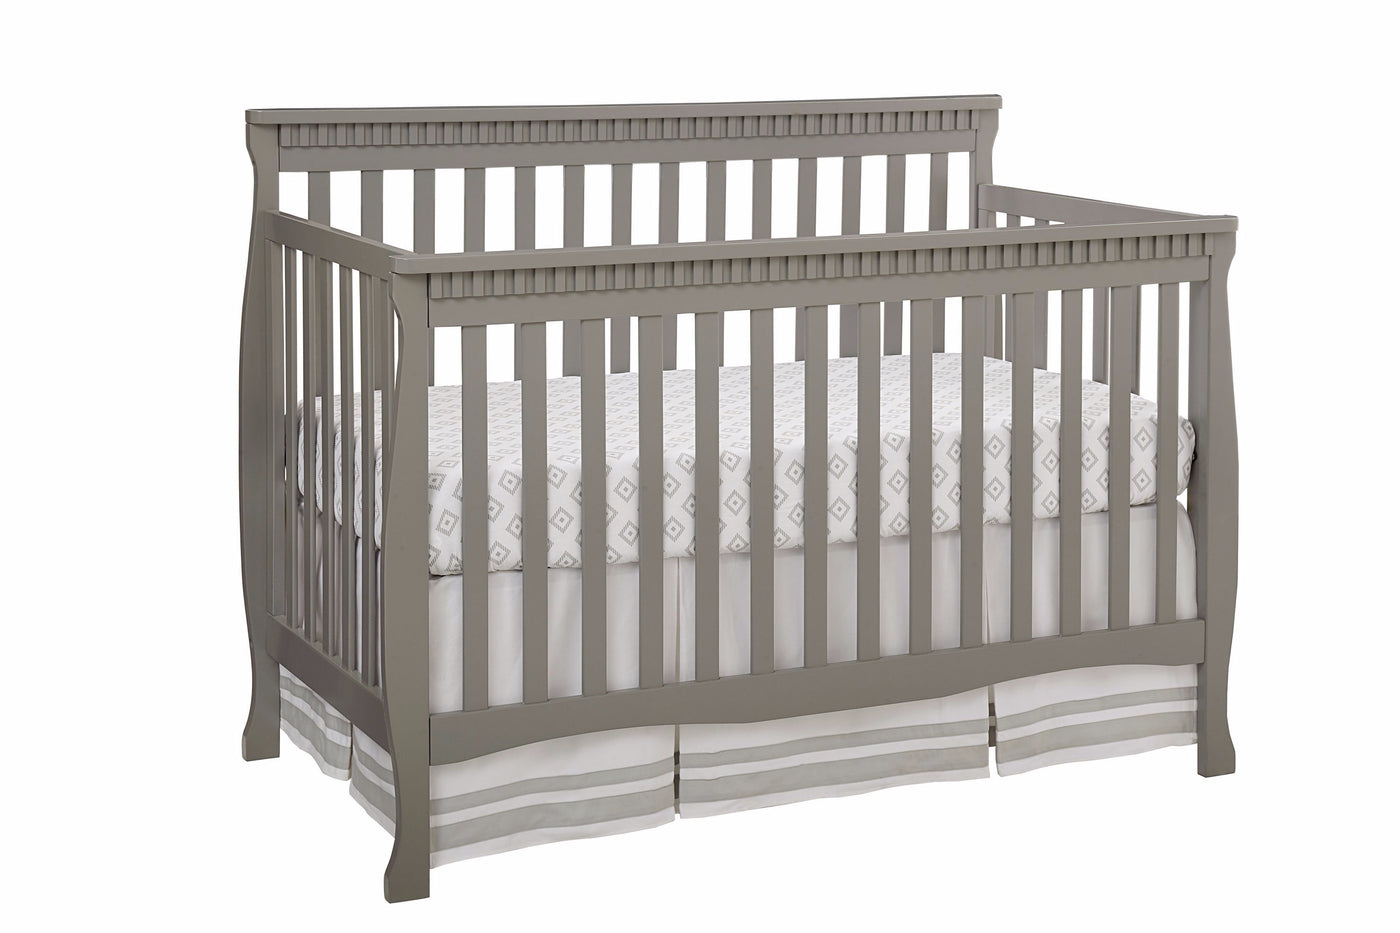 grey baby beds